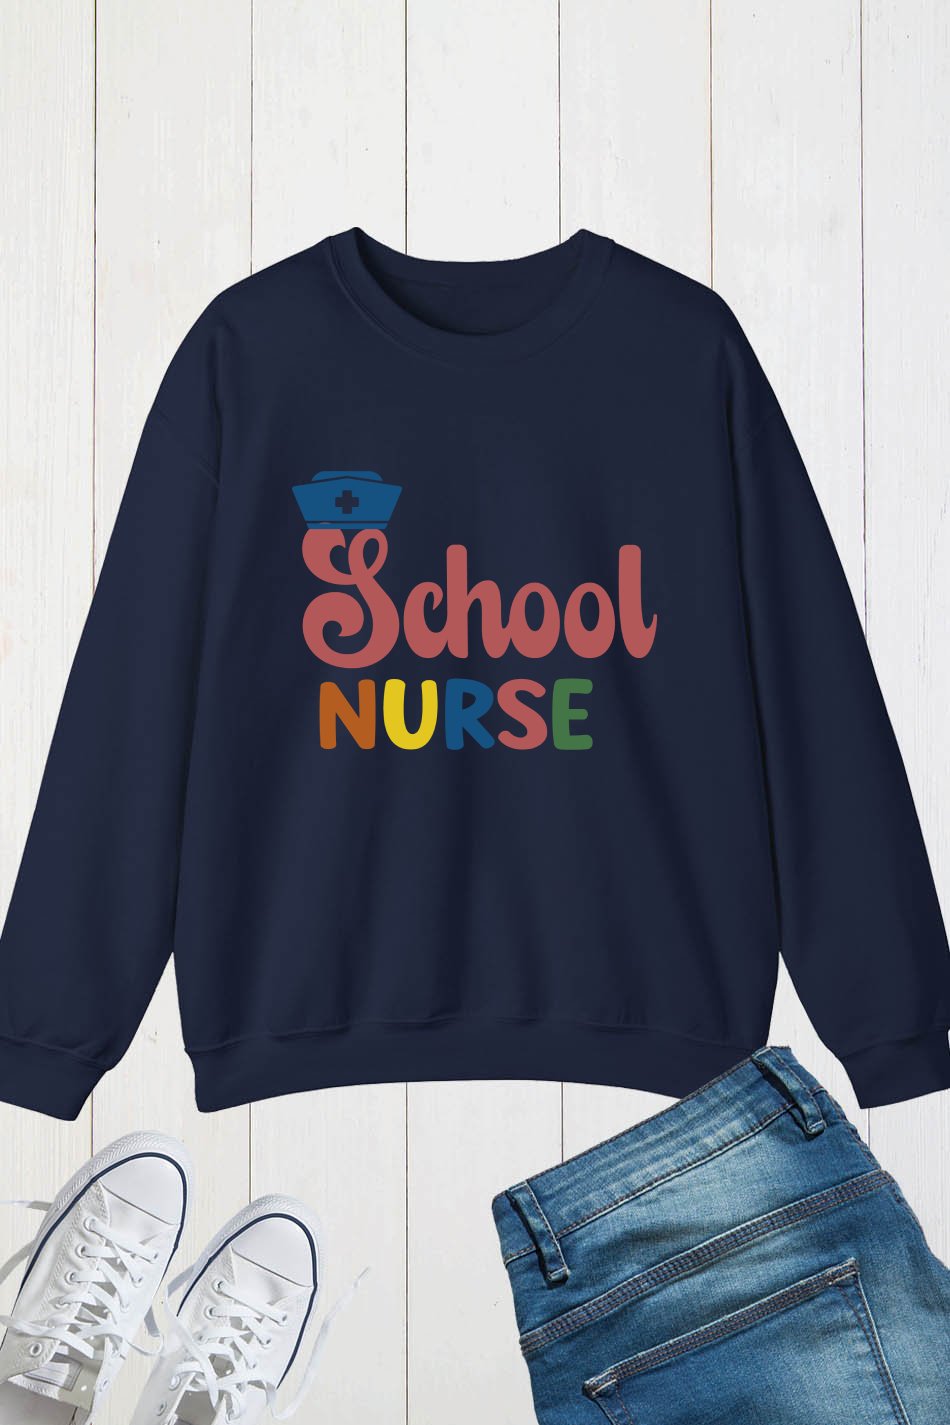 School Nurse Sweatshirts